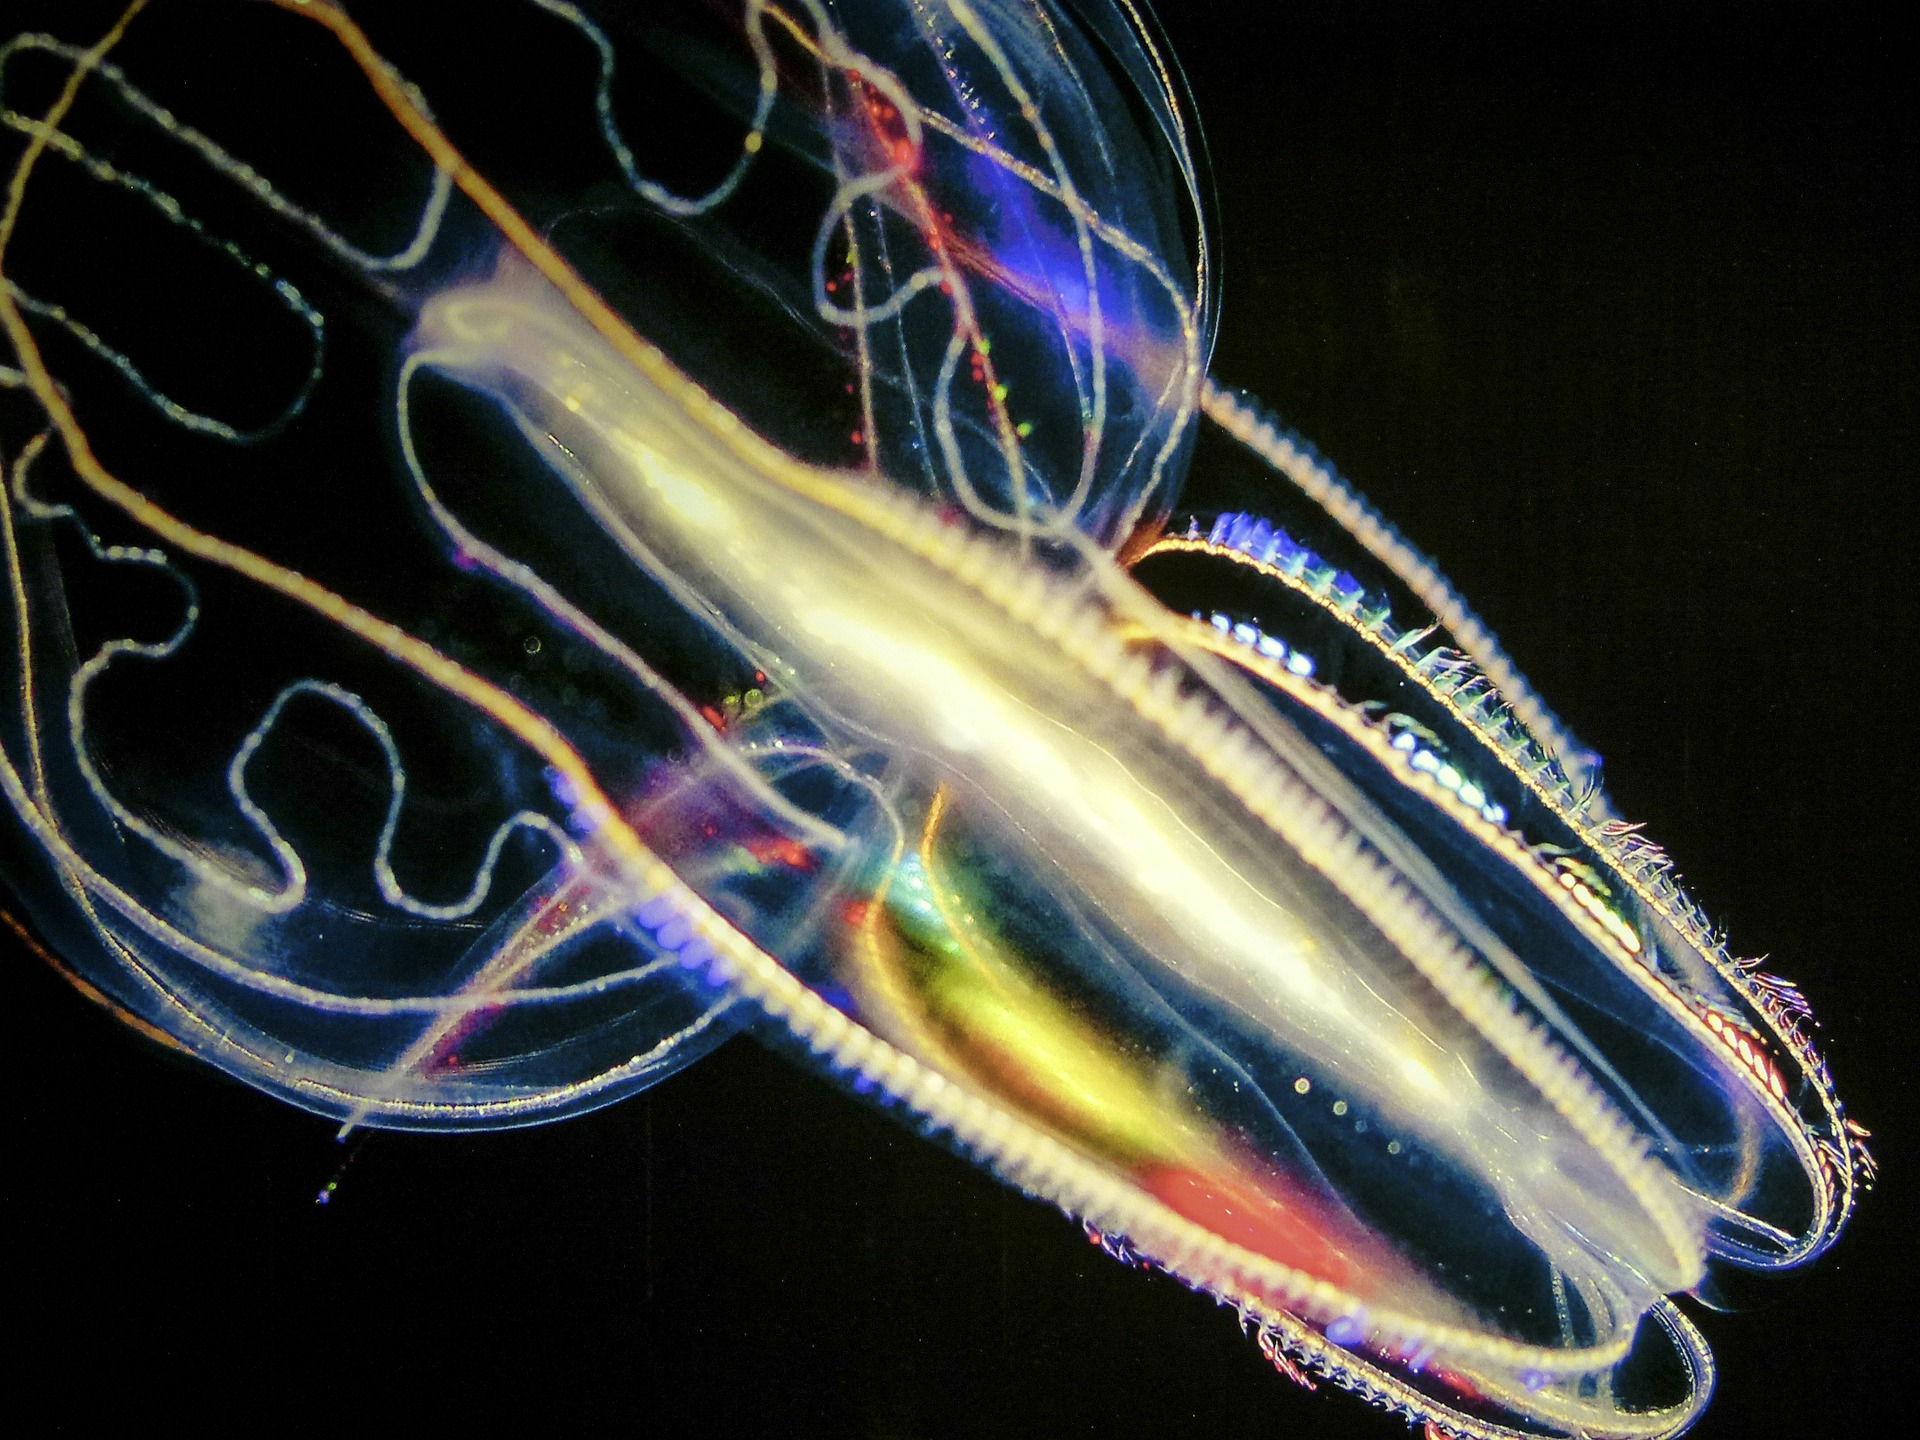 jellyfish-169894_1920_vilagitomeduza_pixabay.jpg